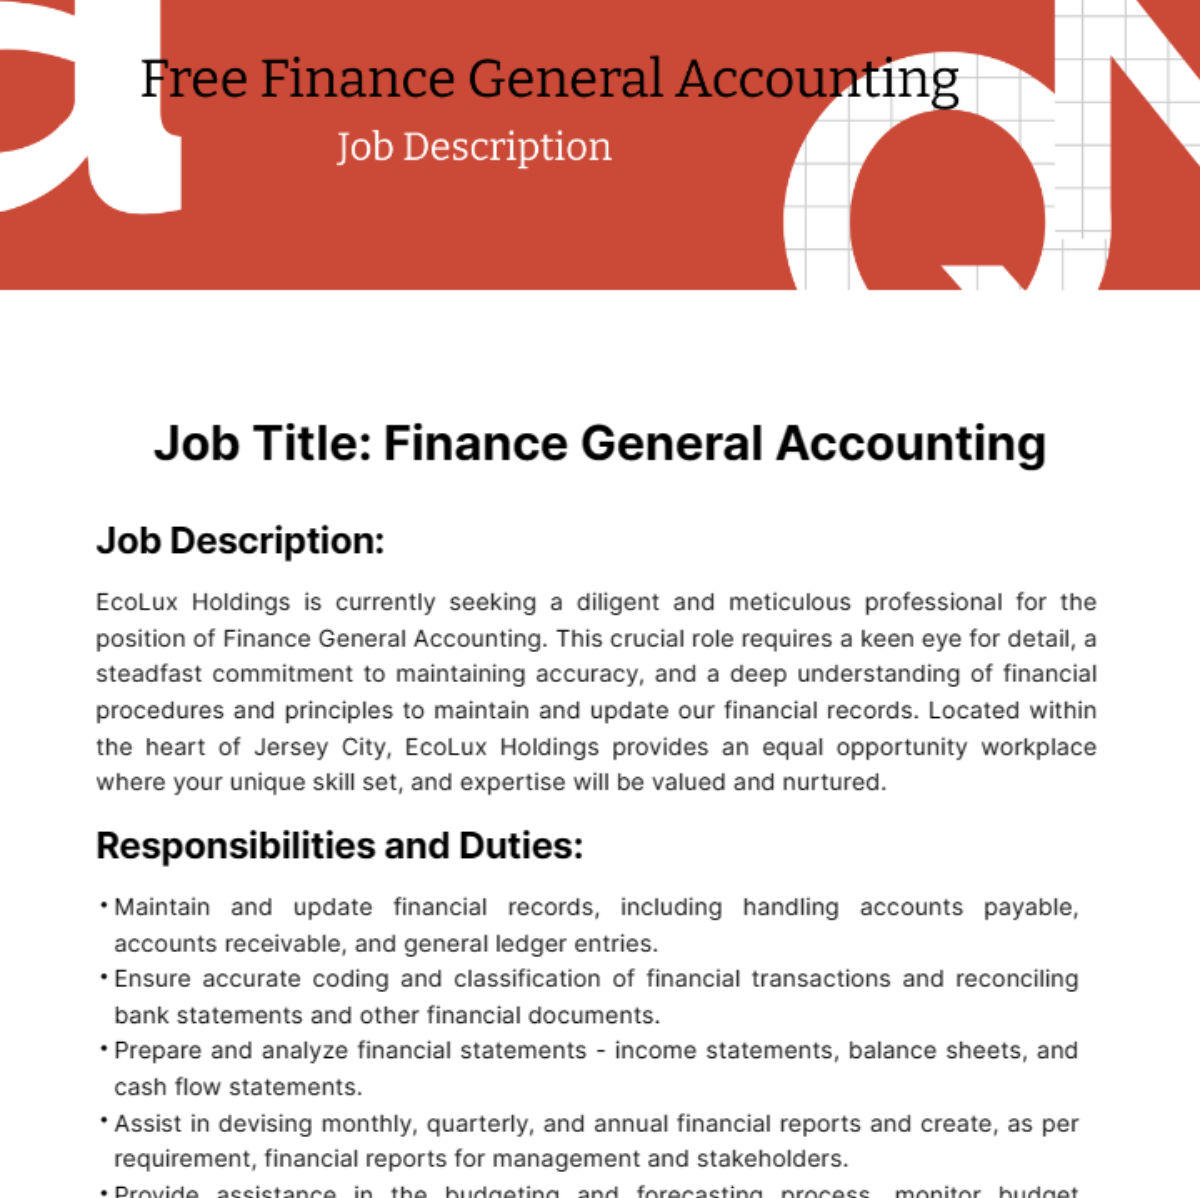 Finance General Accounting Job Description Template